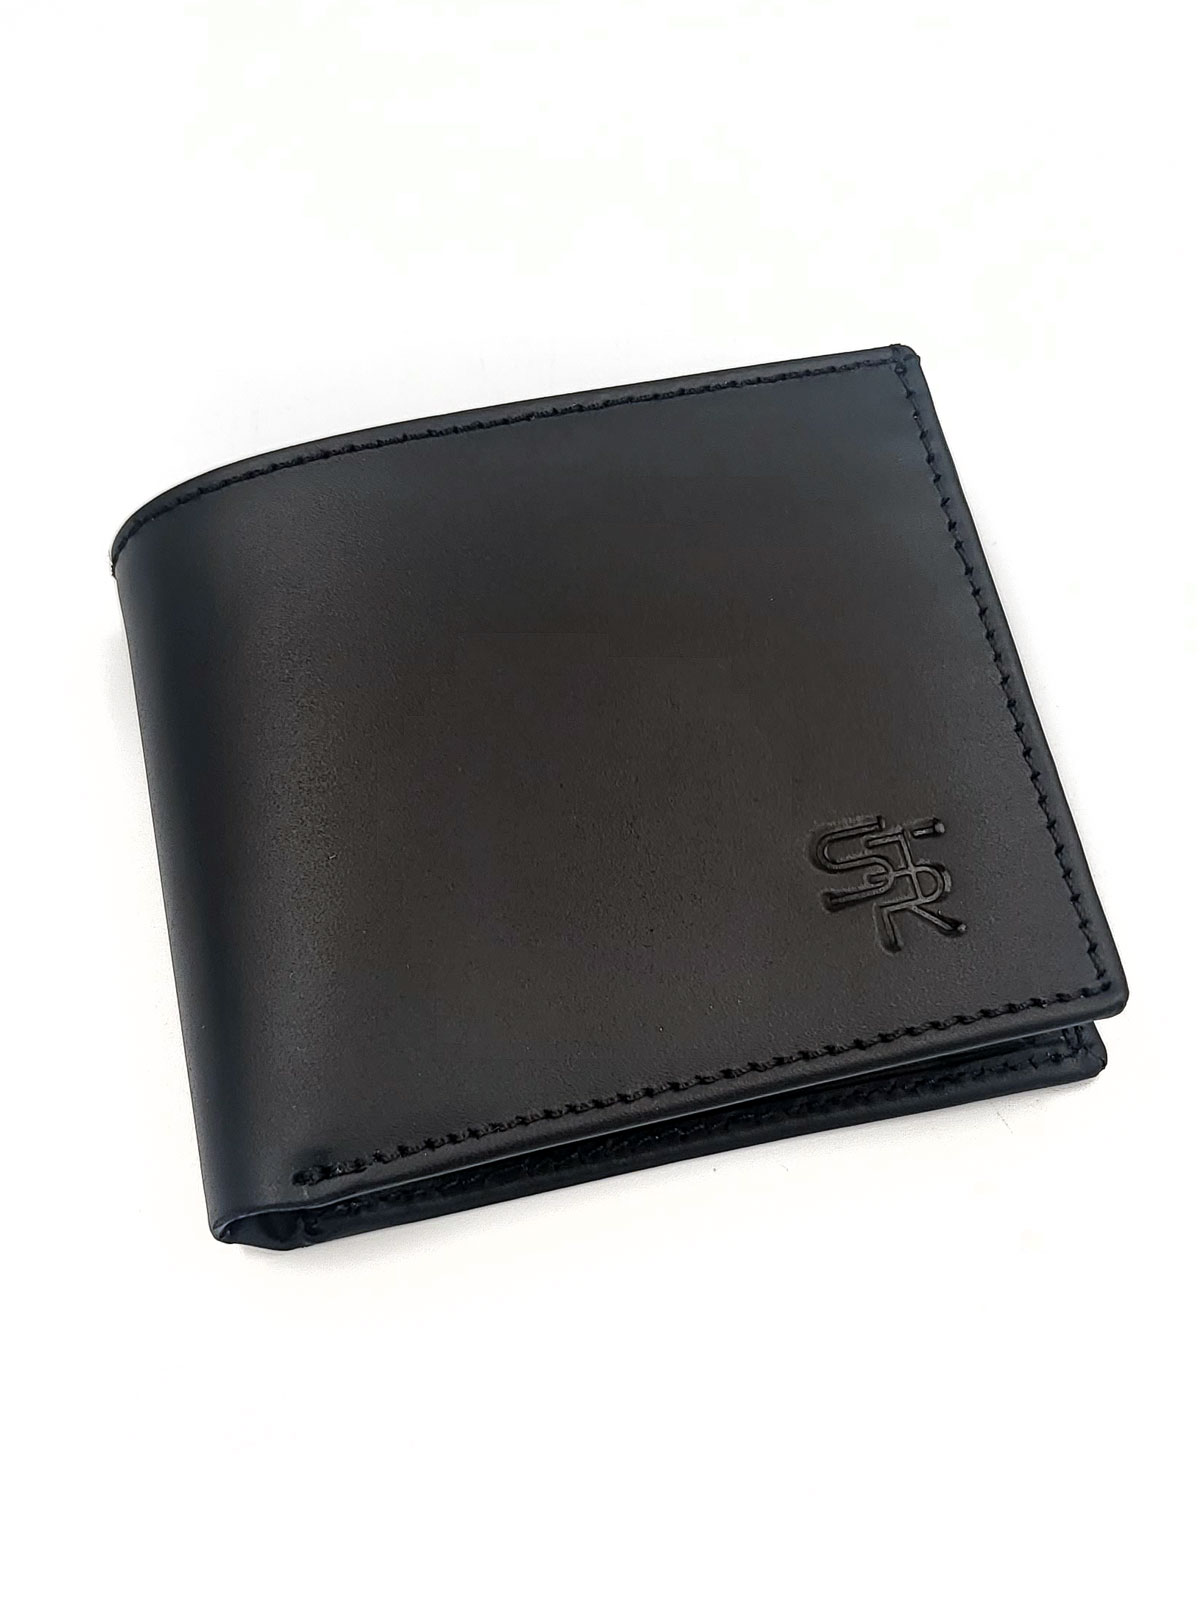 Black classic wallet - 10850 - € 33.18 img3